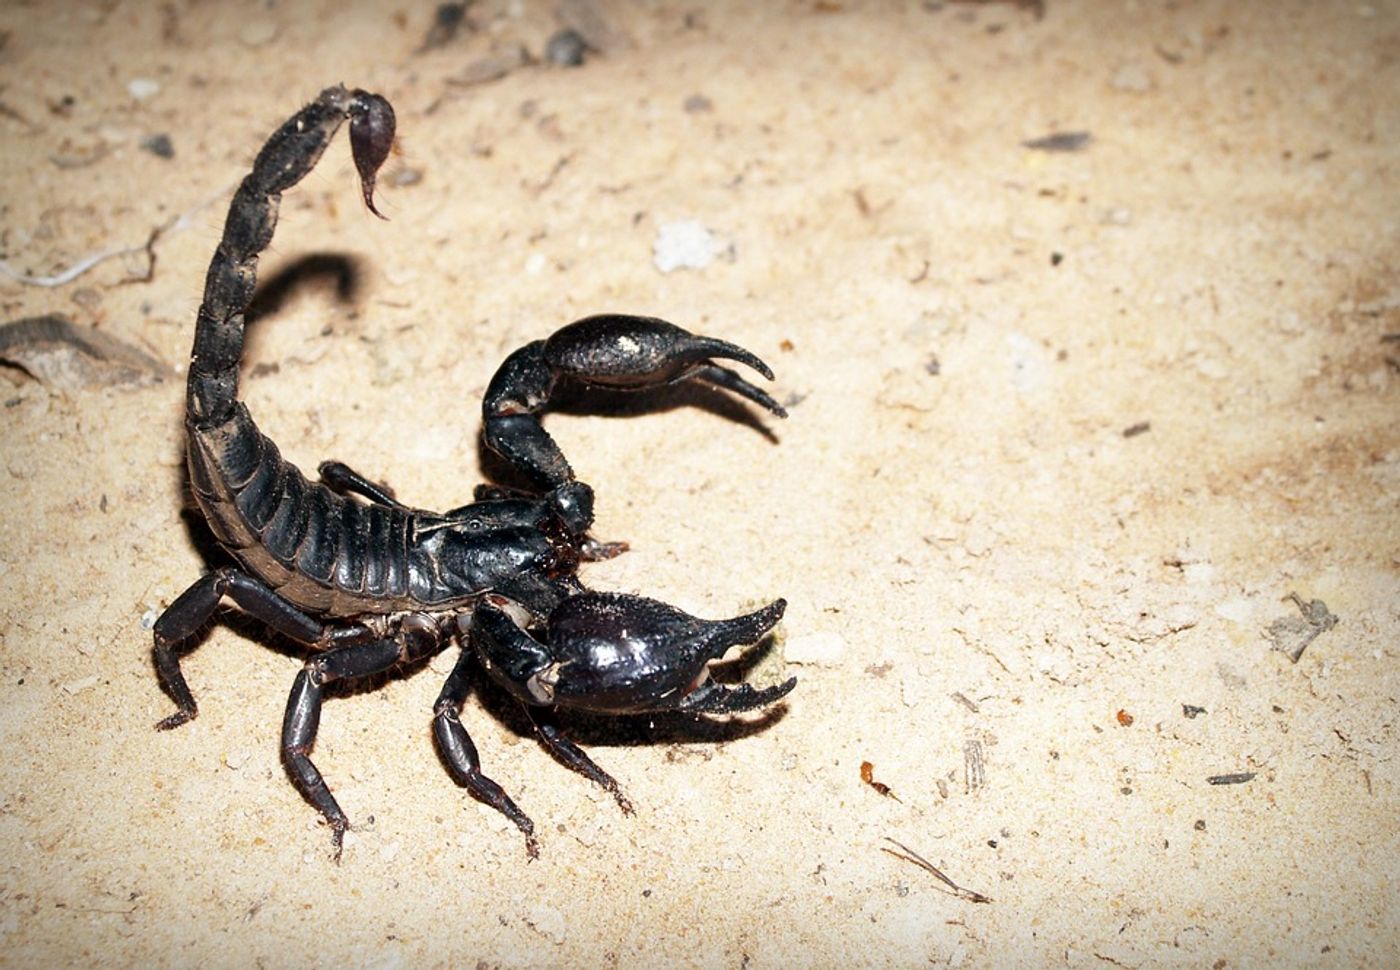 An amino acid found in scorpion venom could help neurosurgeons see brain tumors better. Photo: Pixabay